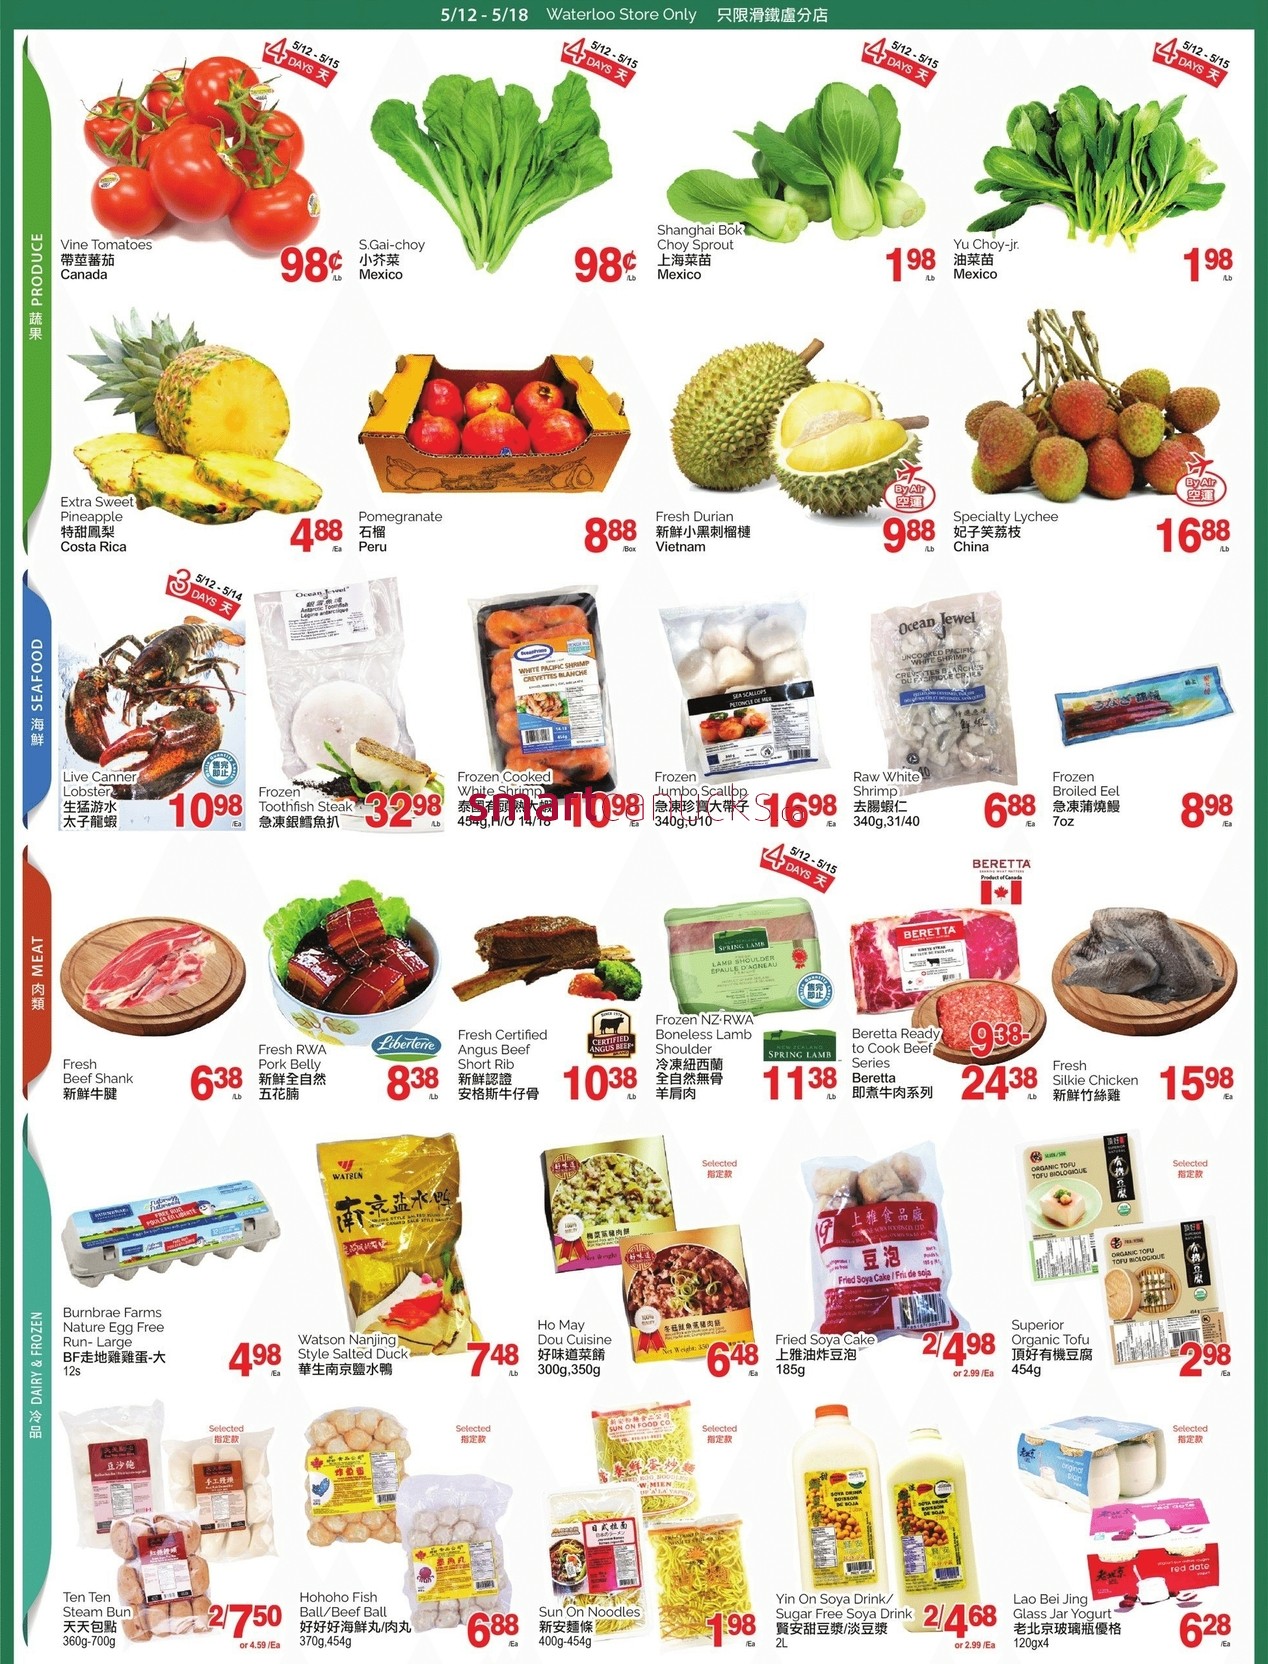 tt-supermarket-waterloo-flyer-may-12-to-18-2.jpg